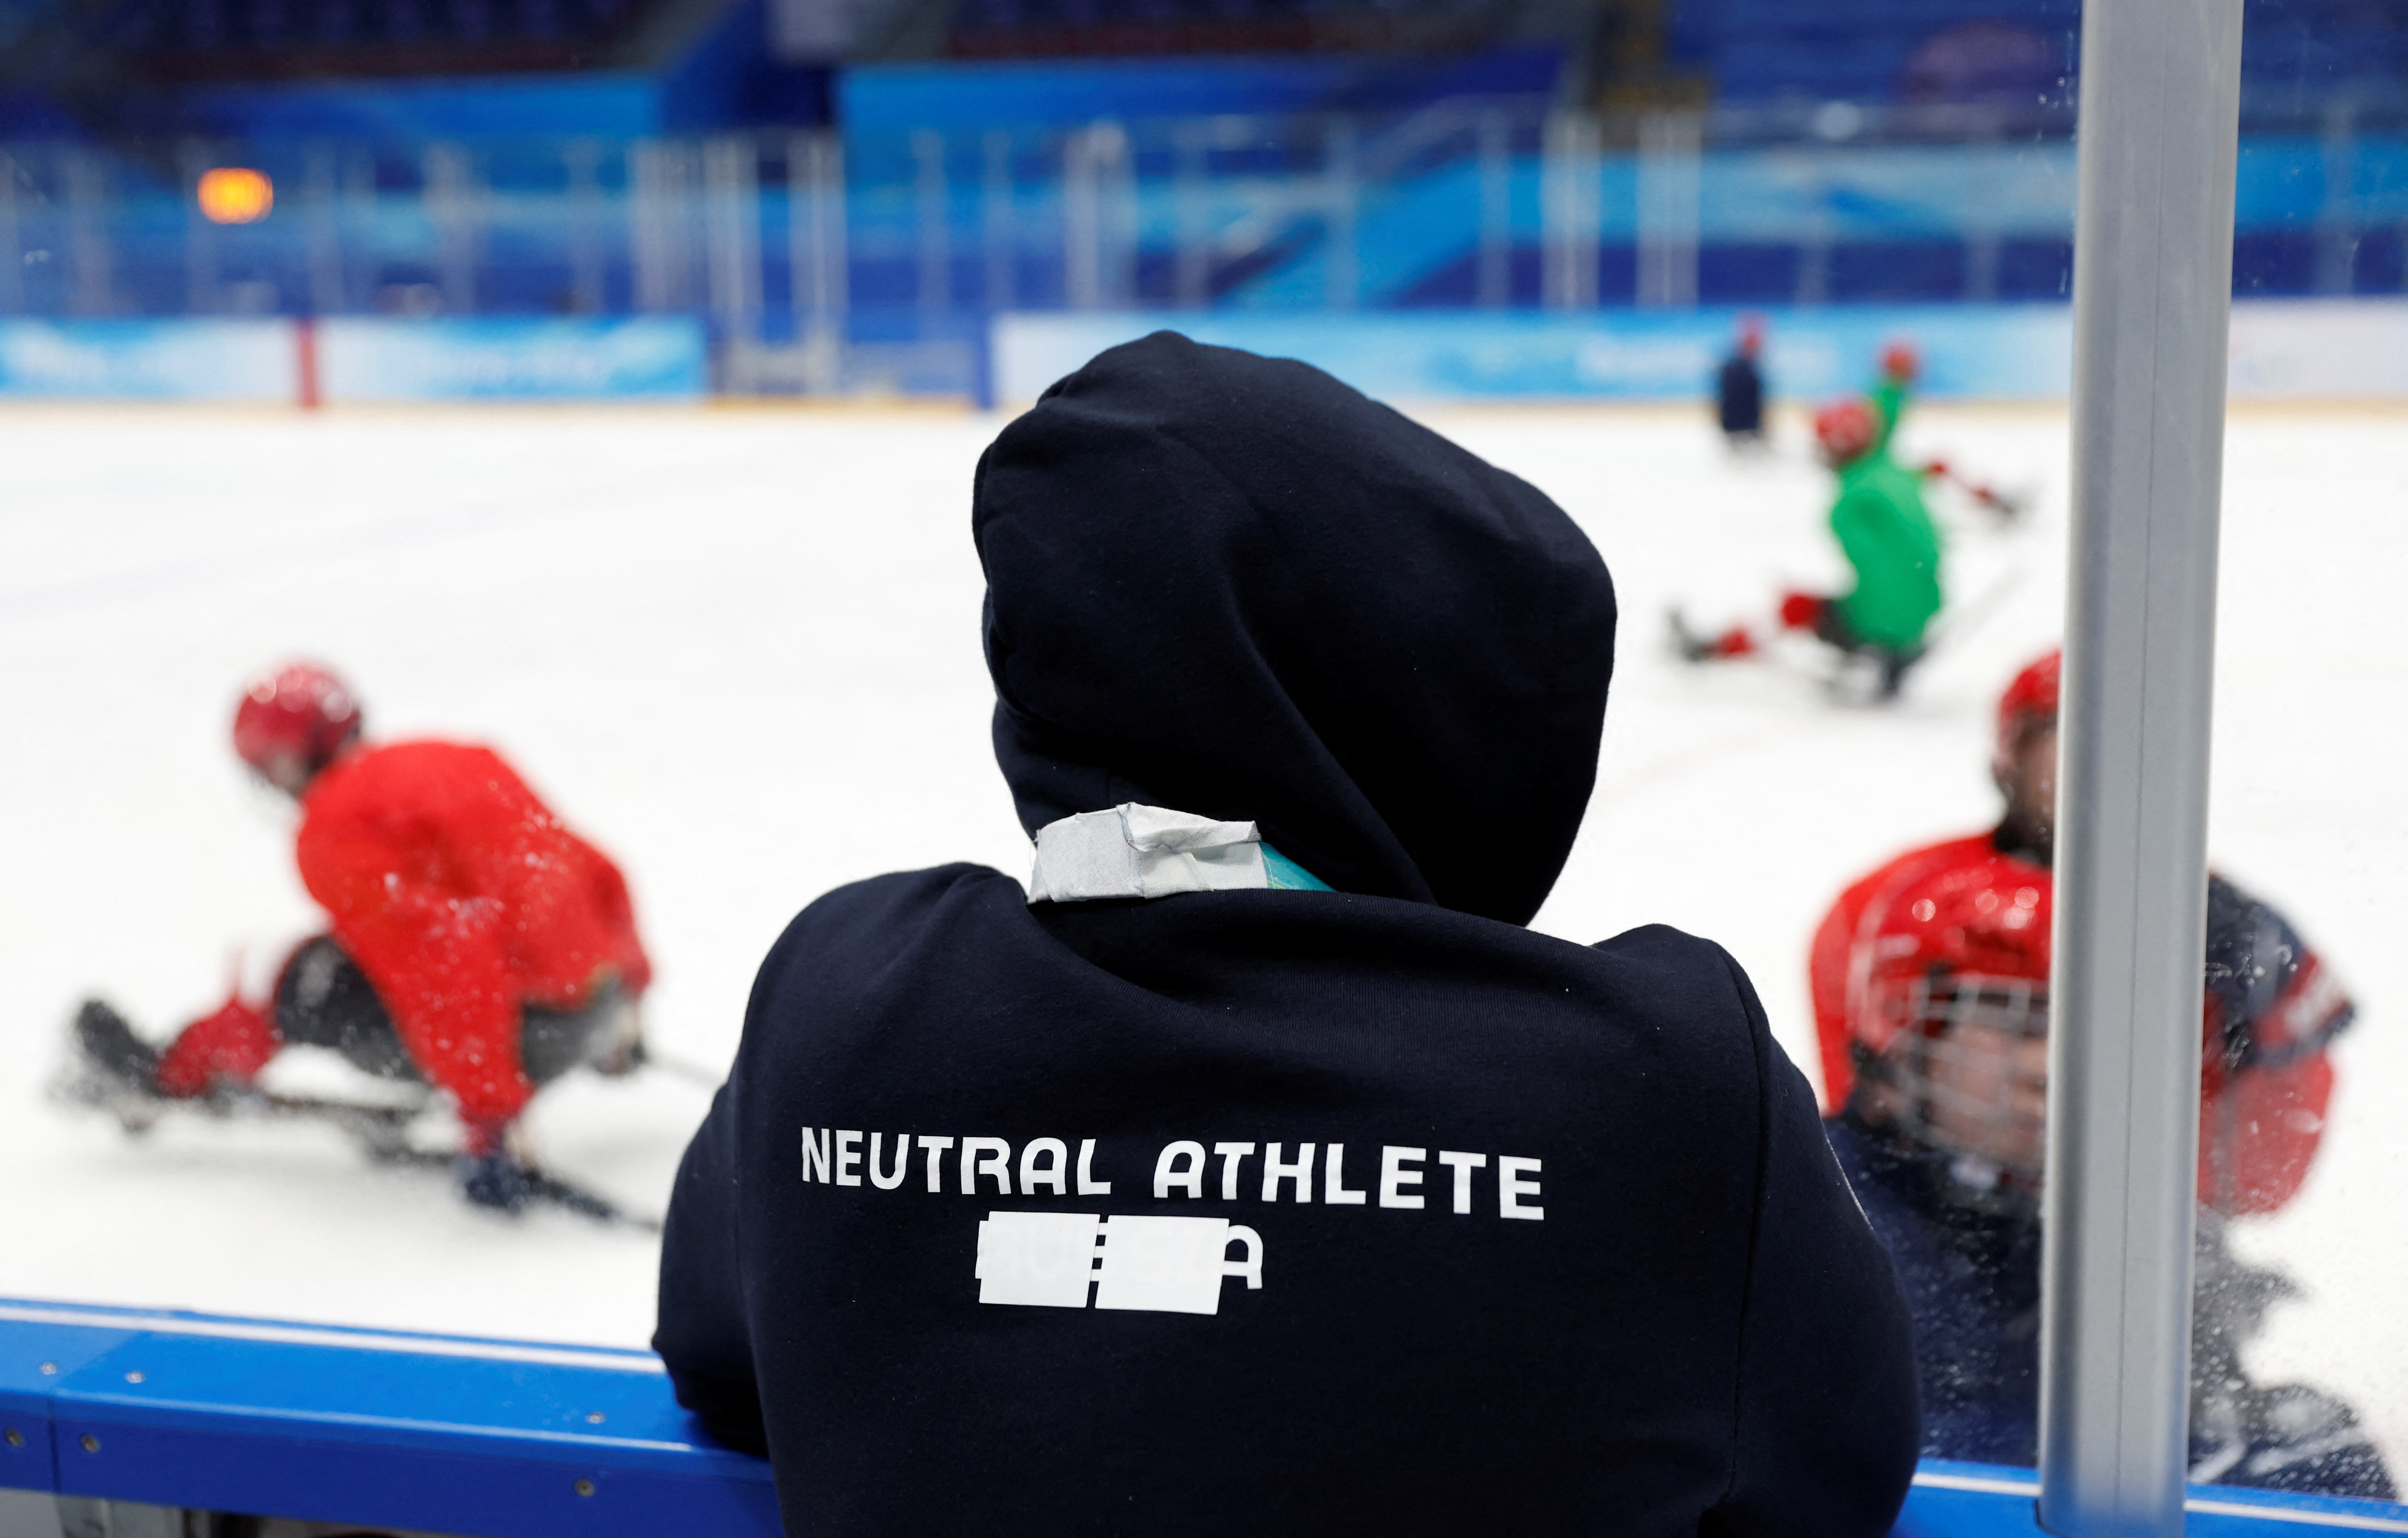 Beijing 2022 Winter Paralympic Games - Para Ice Hockey